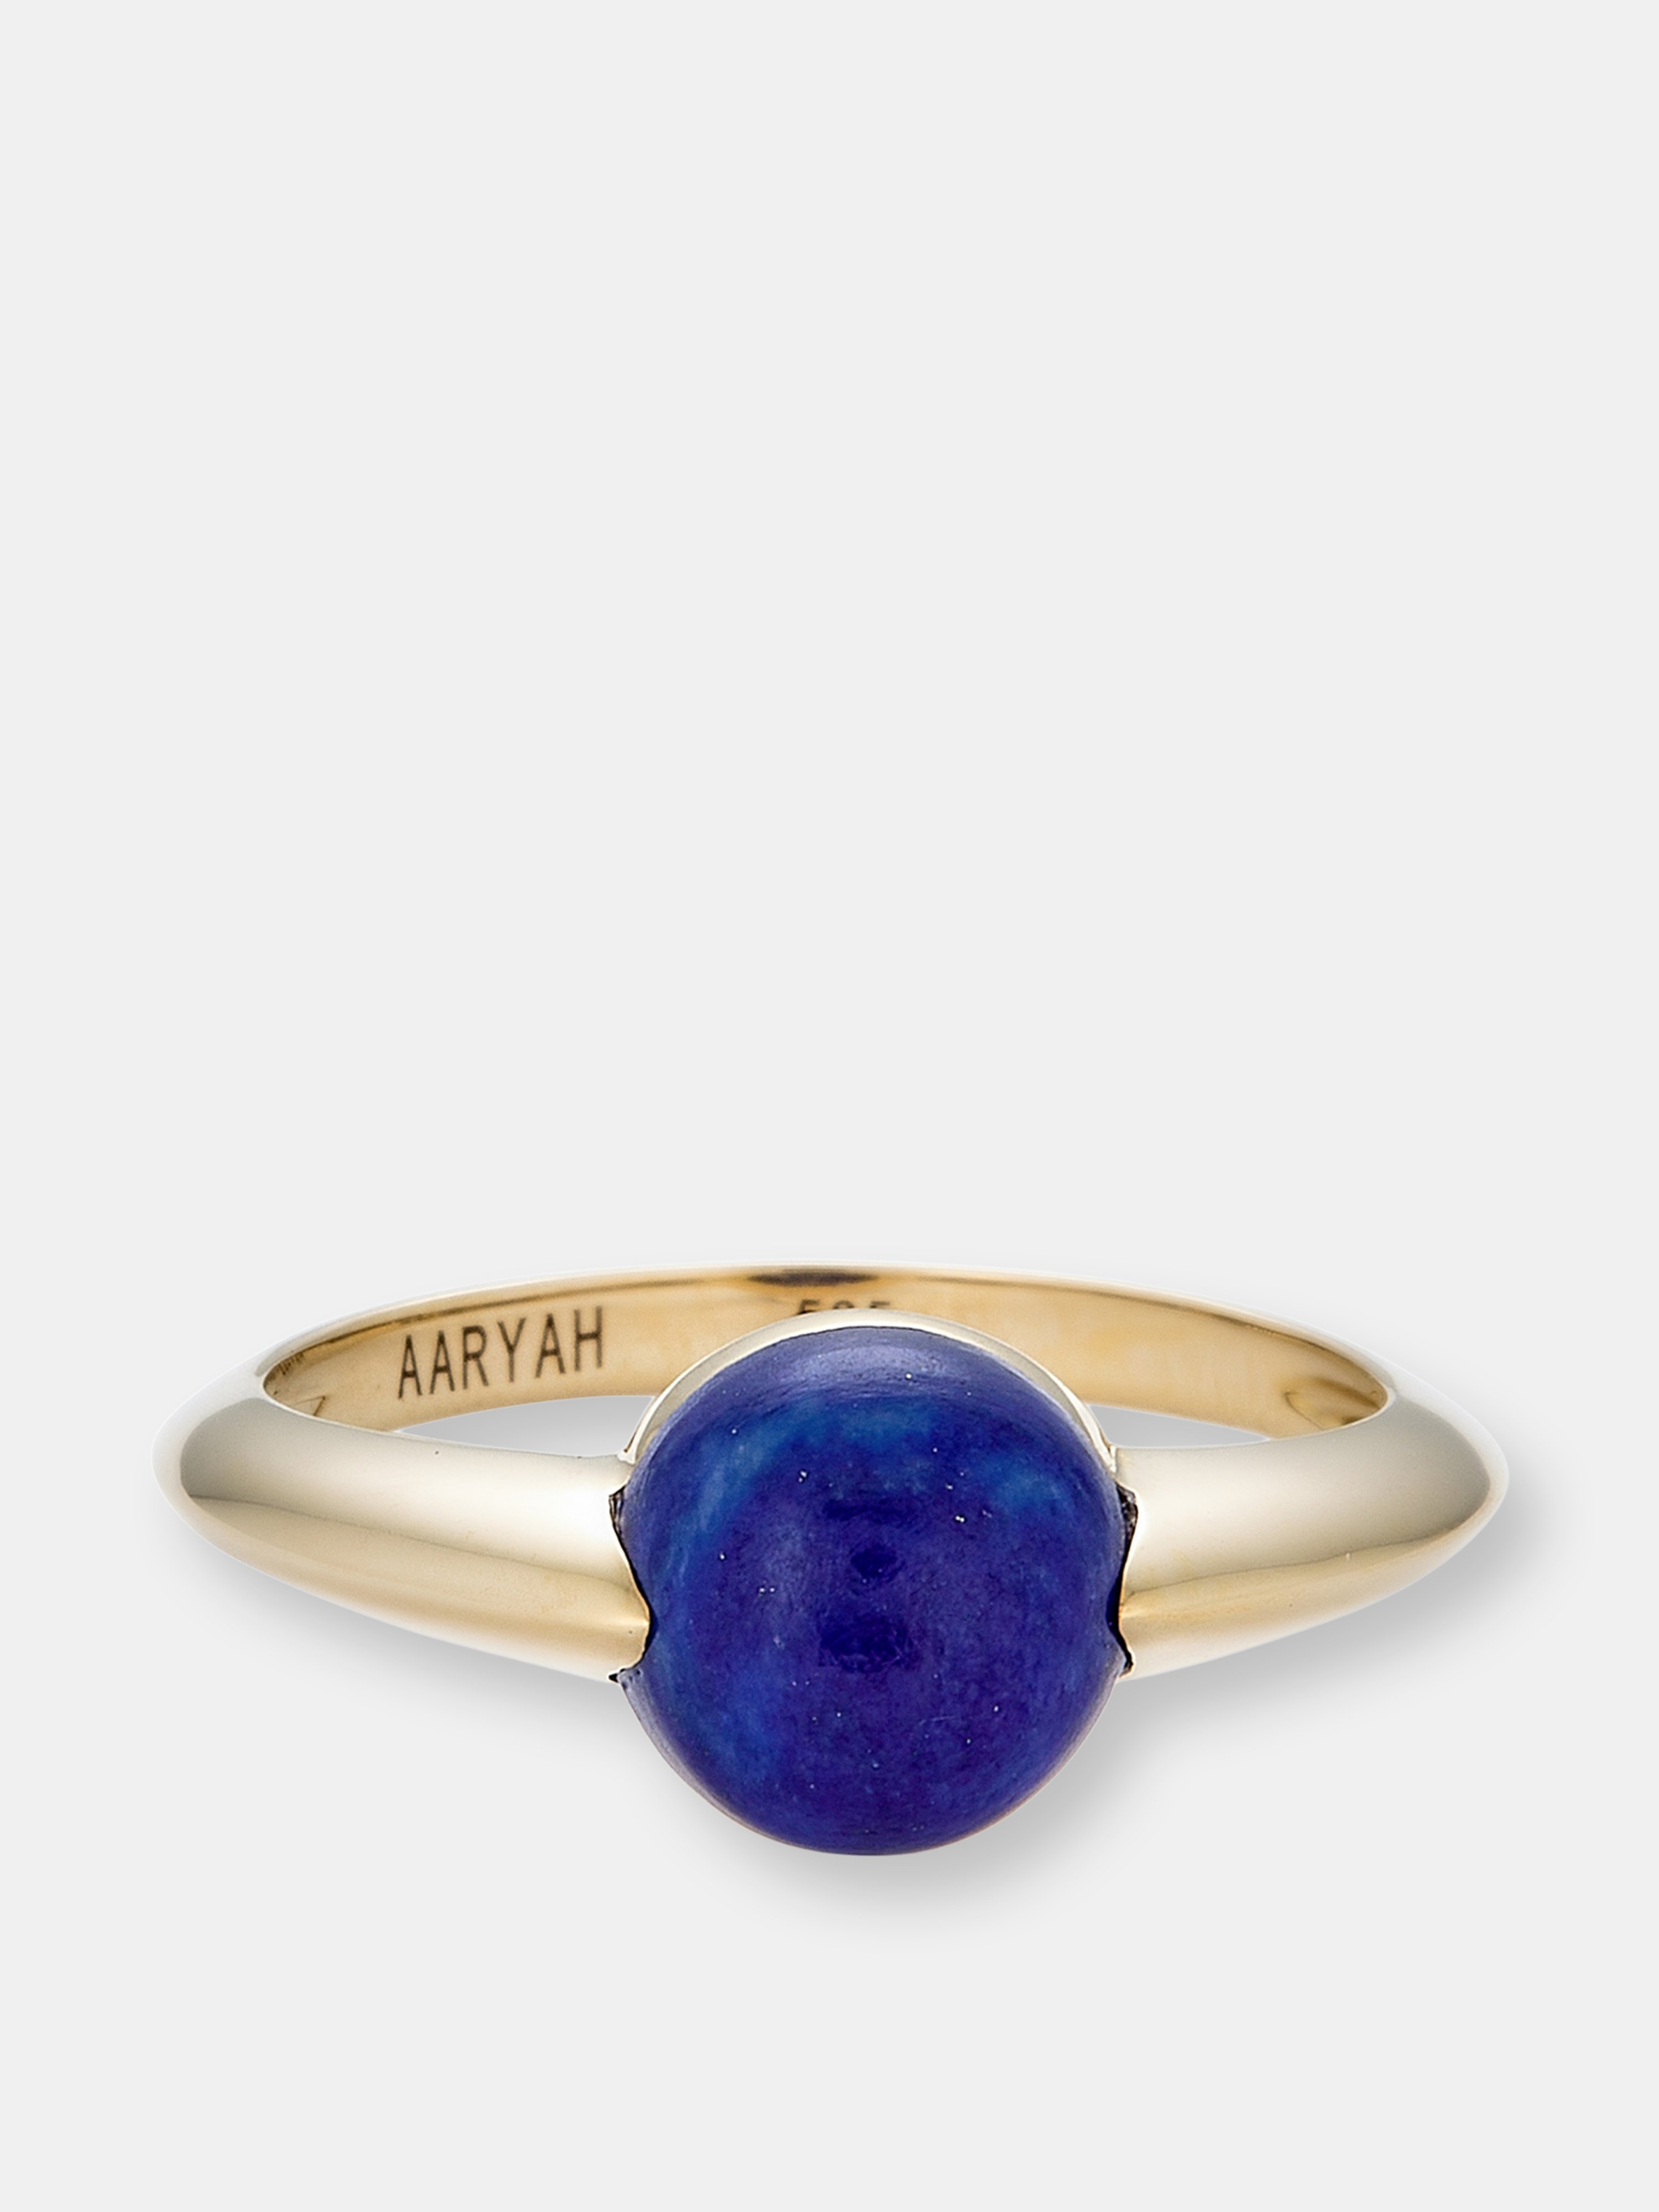 Aaryah Avan Lapis Lazuli 14kt Gold Ring In Blue